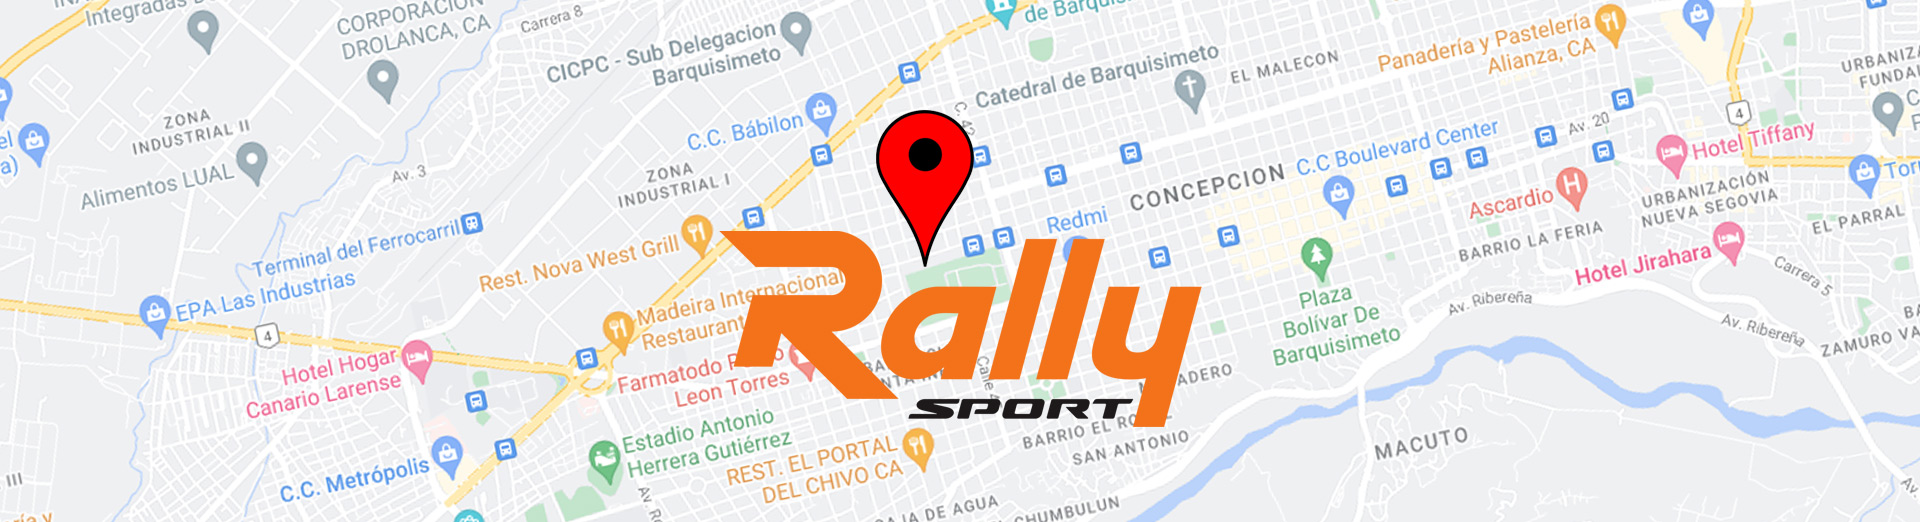 RallySport-InnerBannerTop-1920×522-Distribuidores-Venezuela